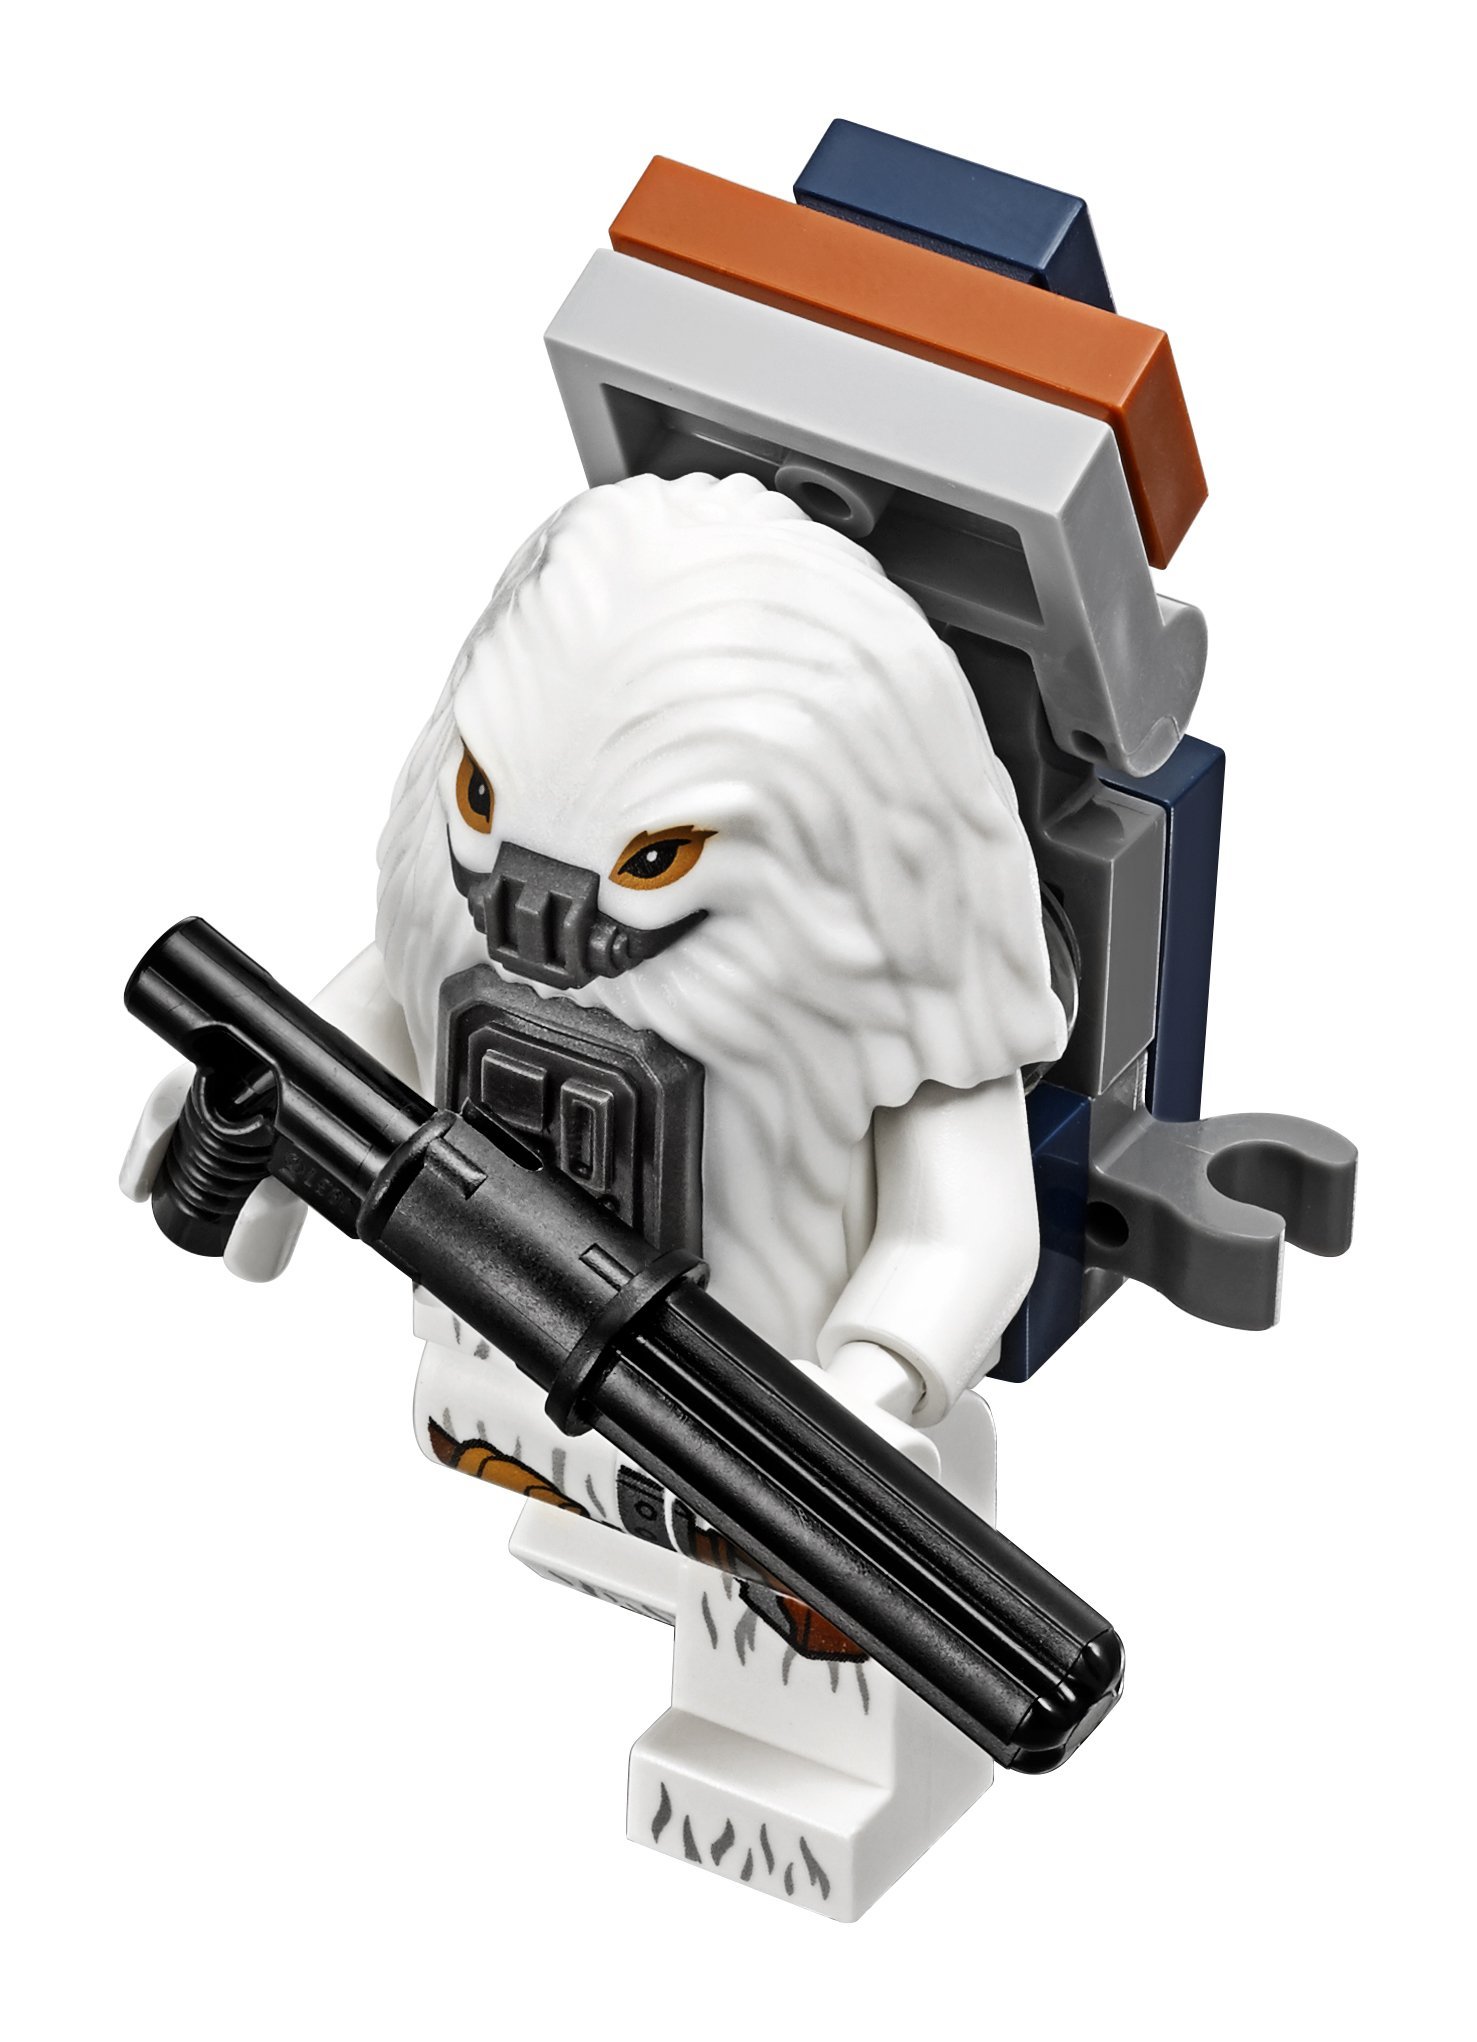 LEGO Star Wars Y-Wing Starfighter 75172 Star Wars Toy (691 Pieces)